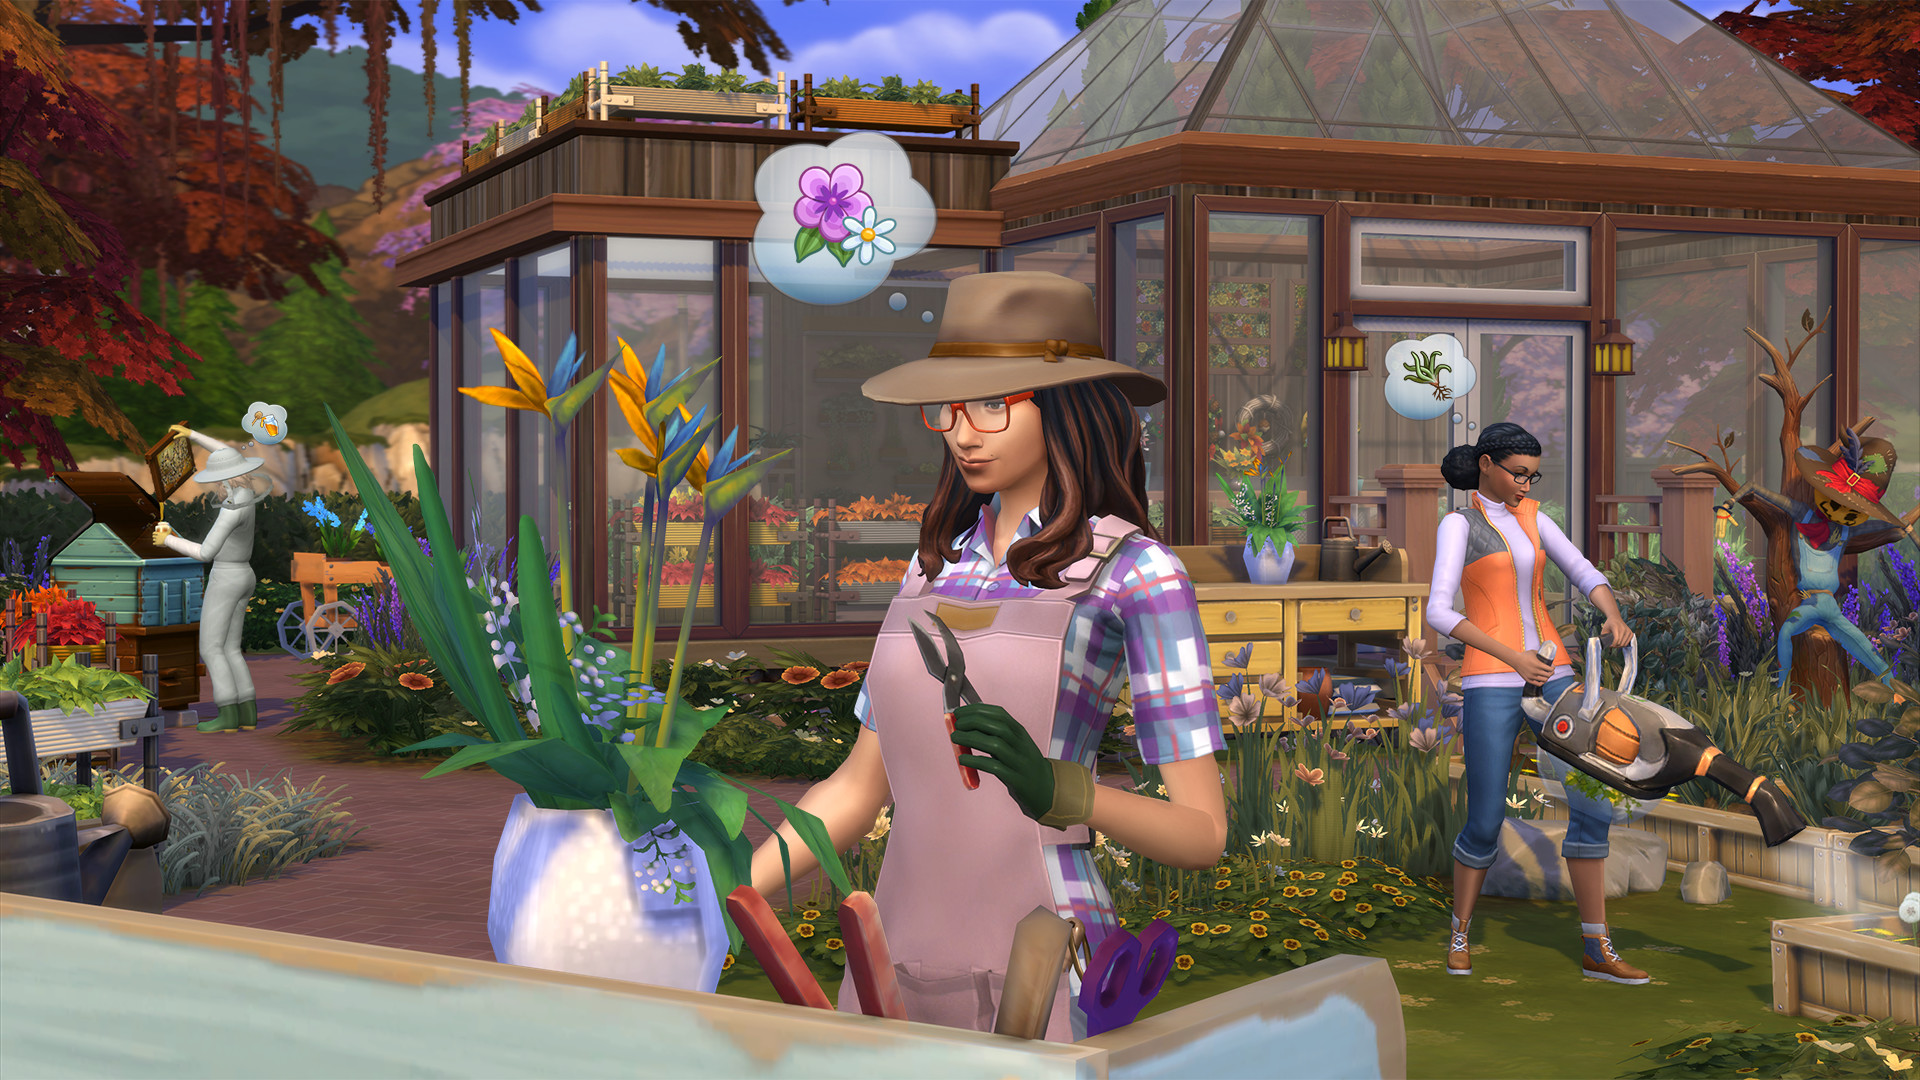 Alla får The Sims 4:s kalender i Cottage Living gratis uppdatering